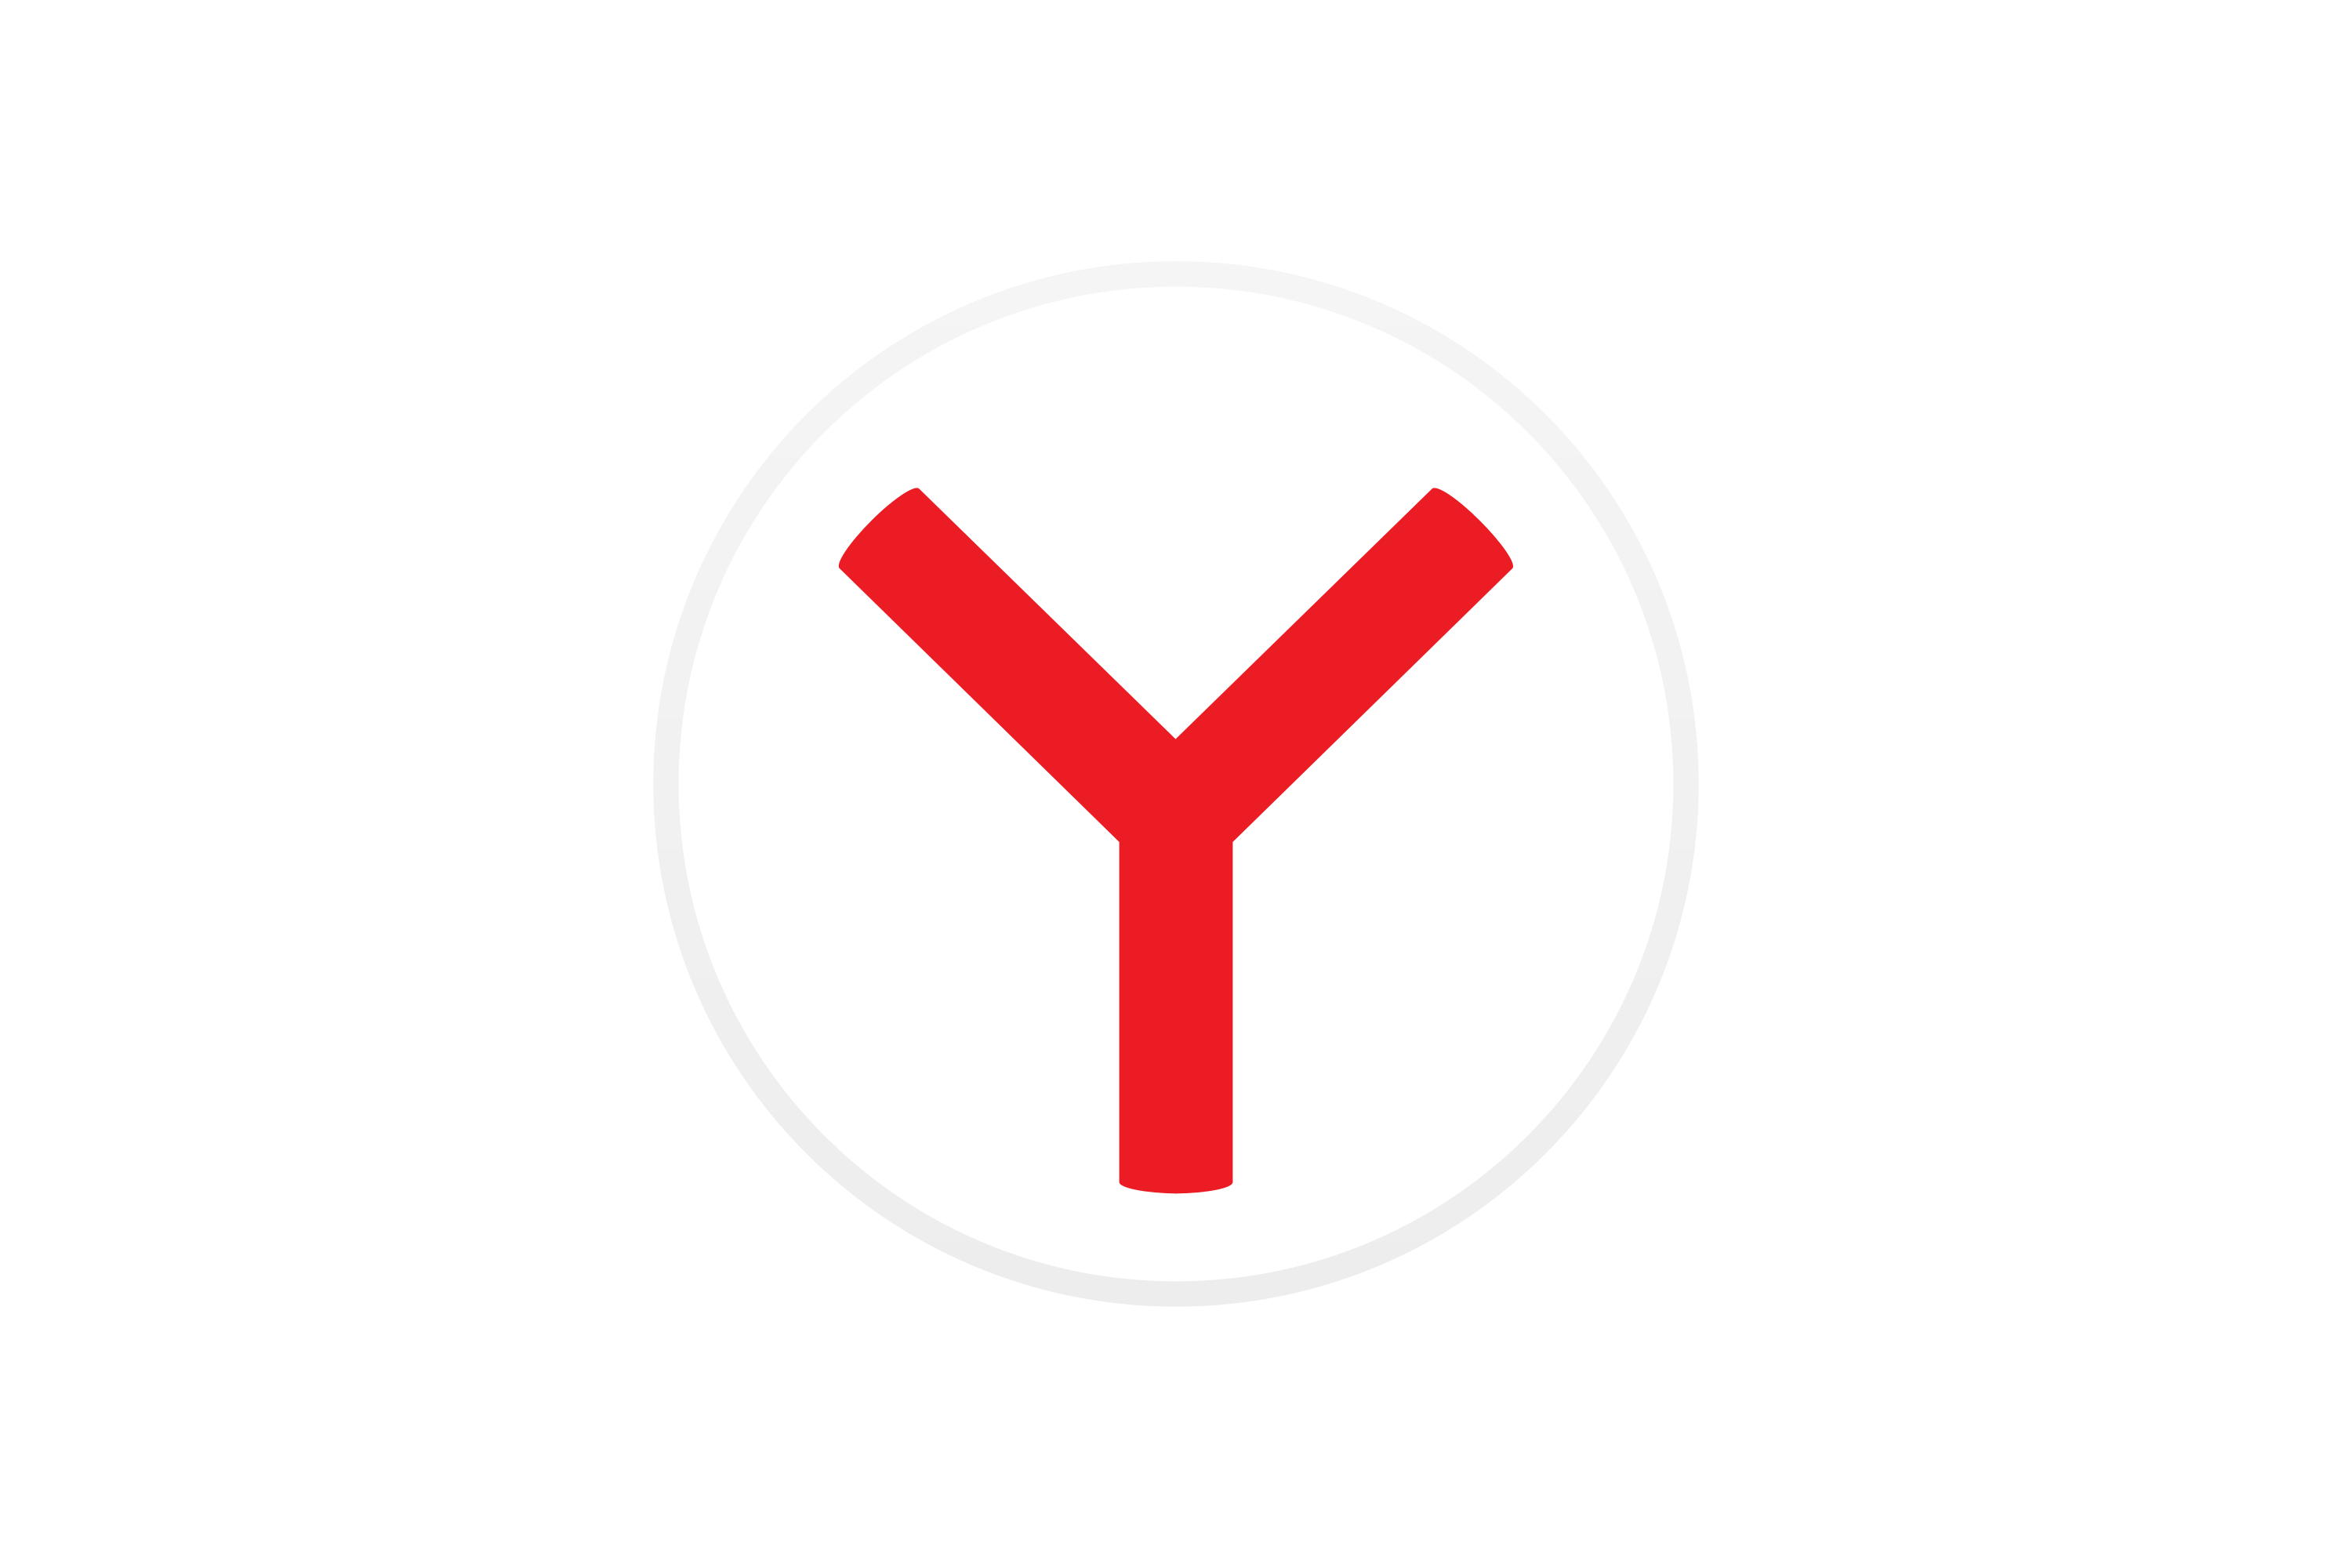 Yandex Logo PNG HD Images